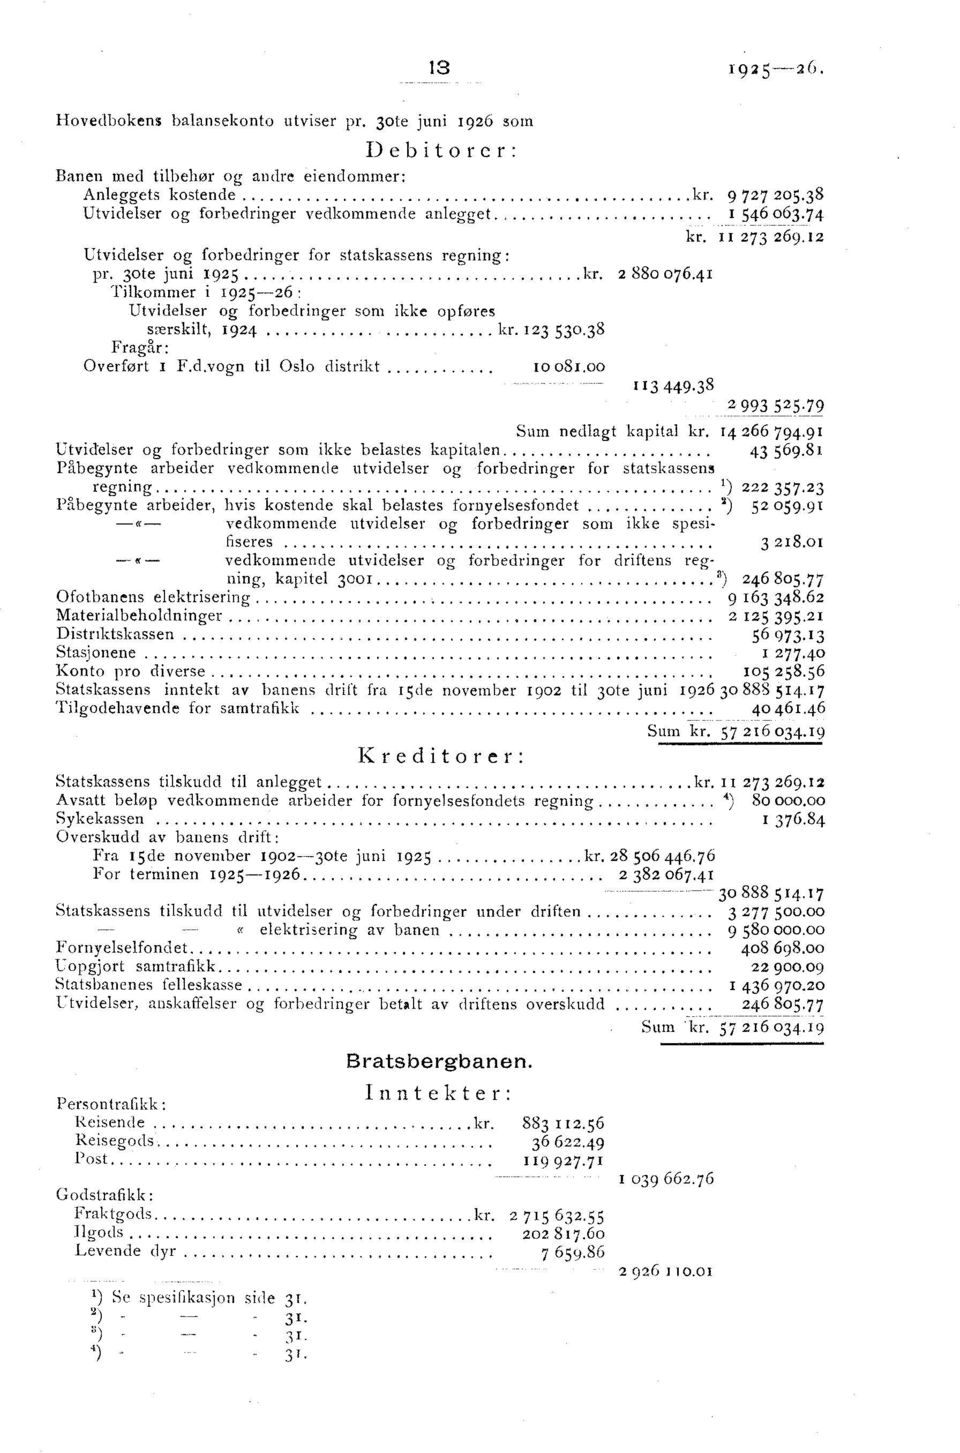 41 Tilkommer i 1925-26: Utvidelser og forbedringer som ikke opføres særskilt, 1924 kr. 123 530.38 Fragår: Overført i F.d.vogn til Oslo distrikt 10 081.o 113 449.384 9 k..3r 81426 6 79 52